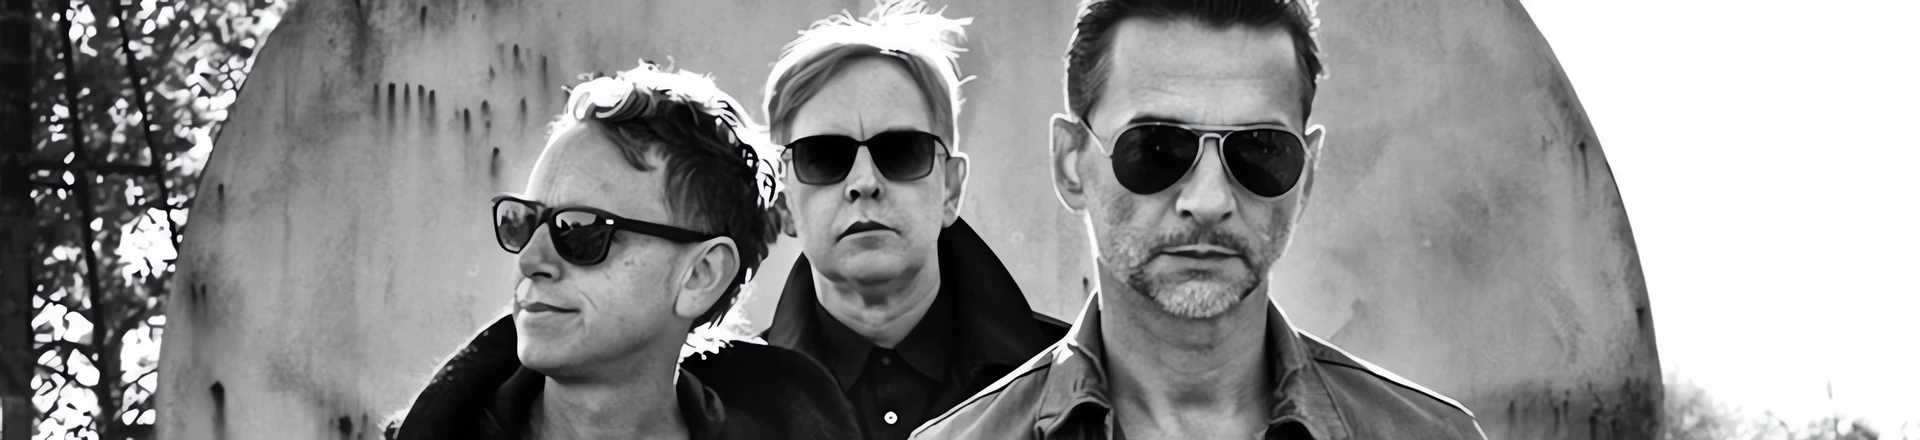 Depeche Mode: Trasa Global Spirit ze sprzętem Warm Audio